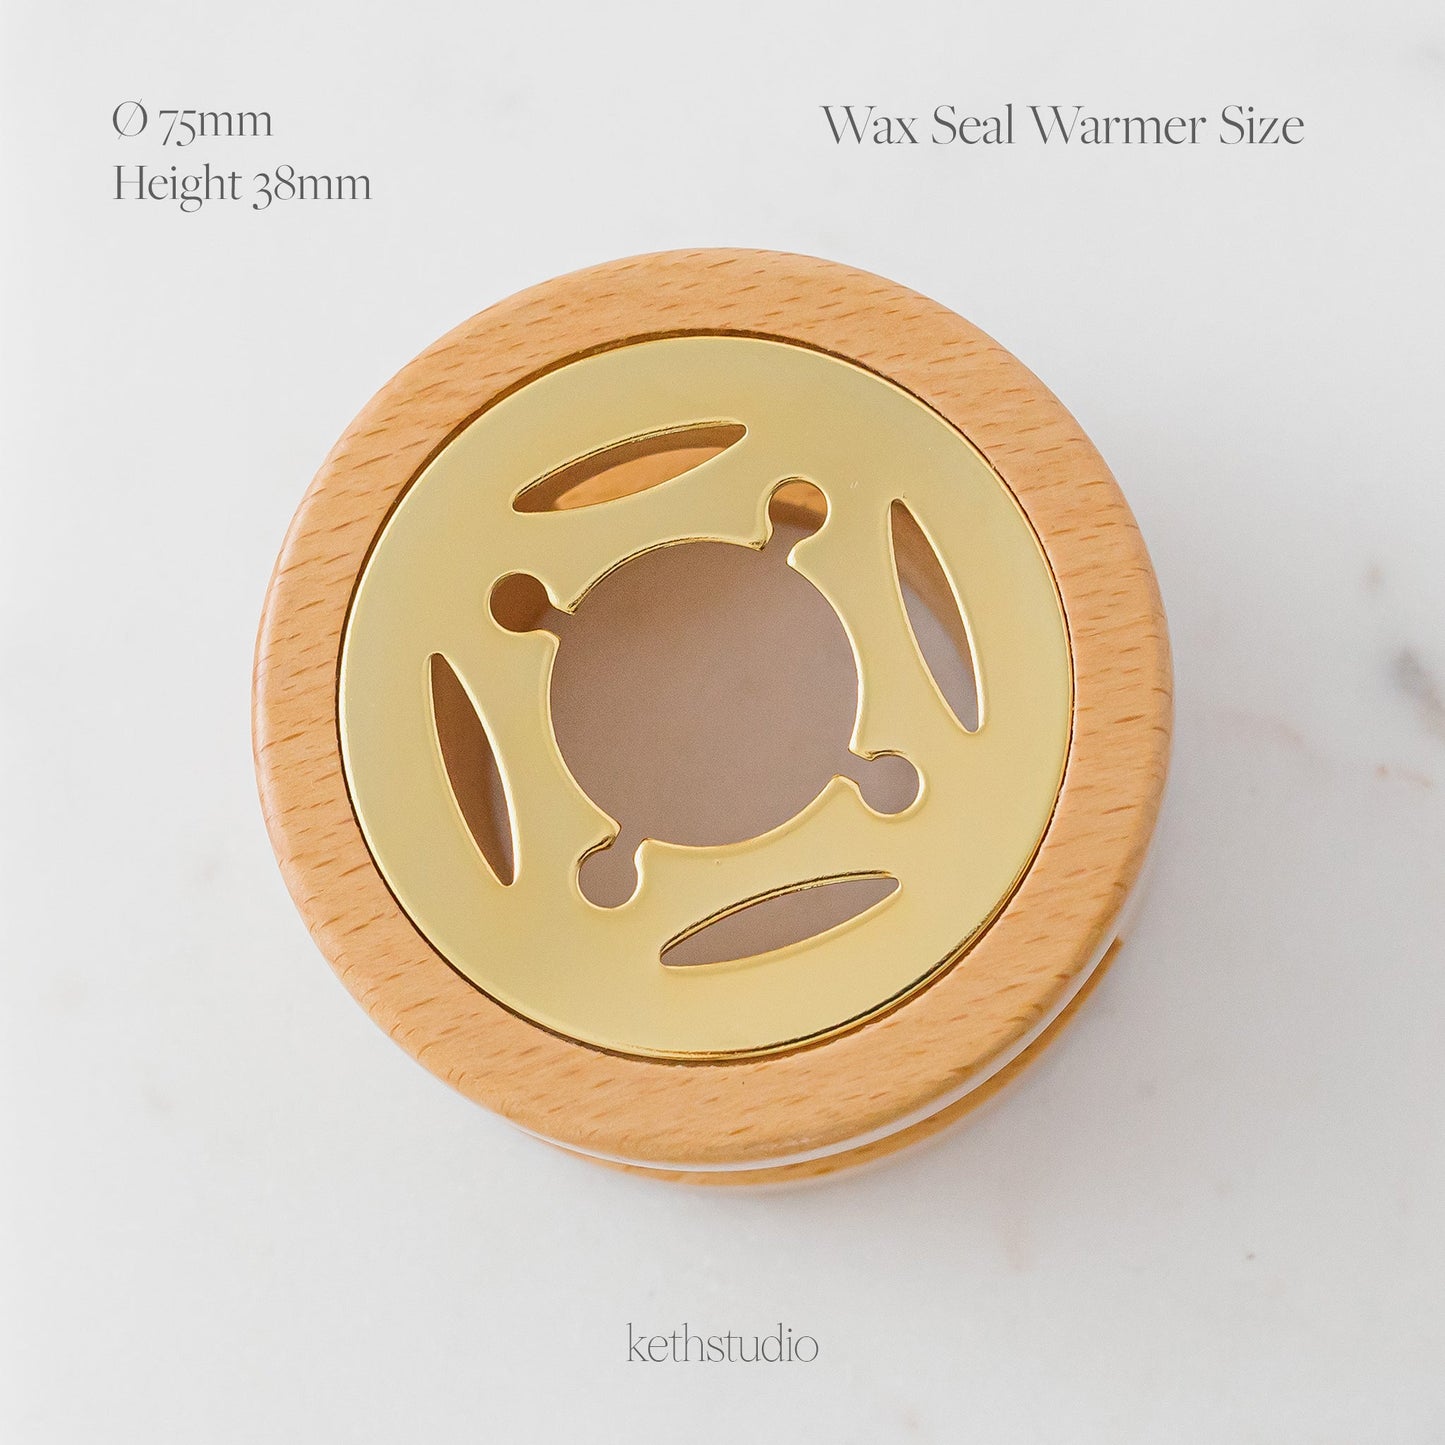 ✧ 50% OFF ✧ Seconds Wax Seal Warmer